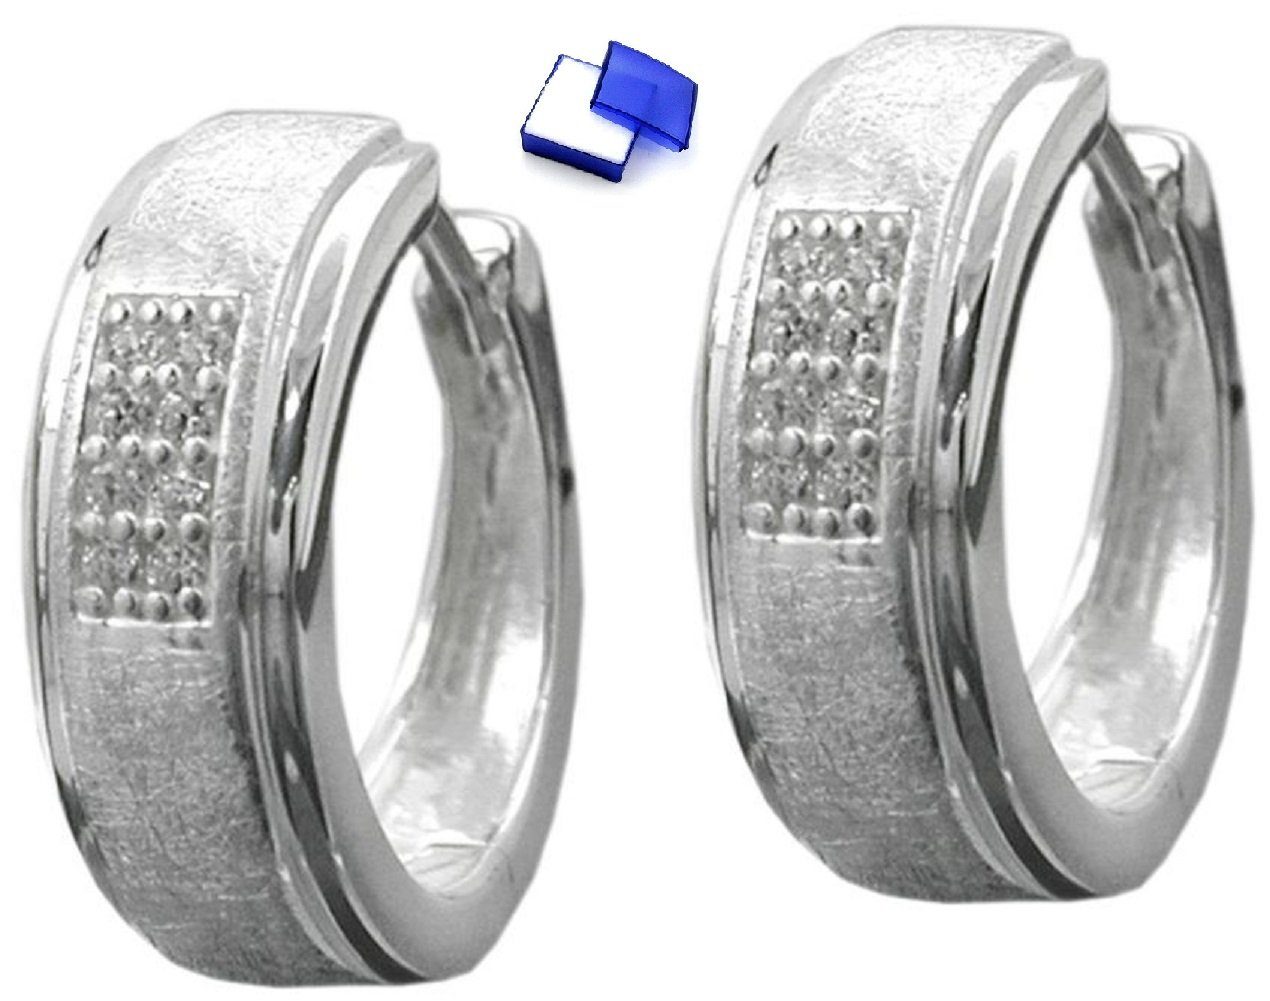 Damen Schmuck unbespielt Paar Creolen Ohrringe Ohrstecker Creolen mit Zirkonias matt diamantiert 925 Silber 14 x 5 mm inklusive 